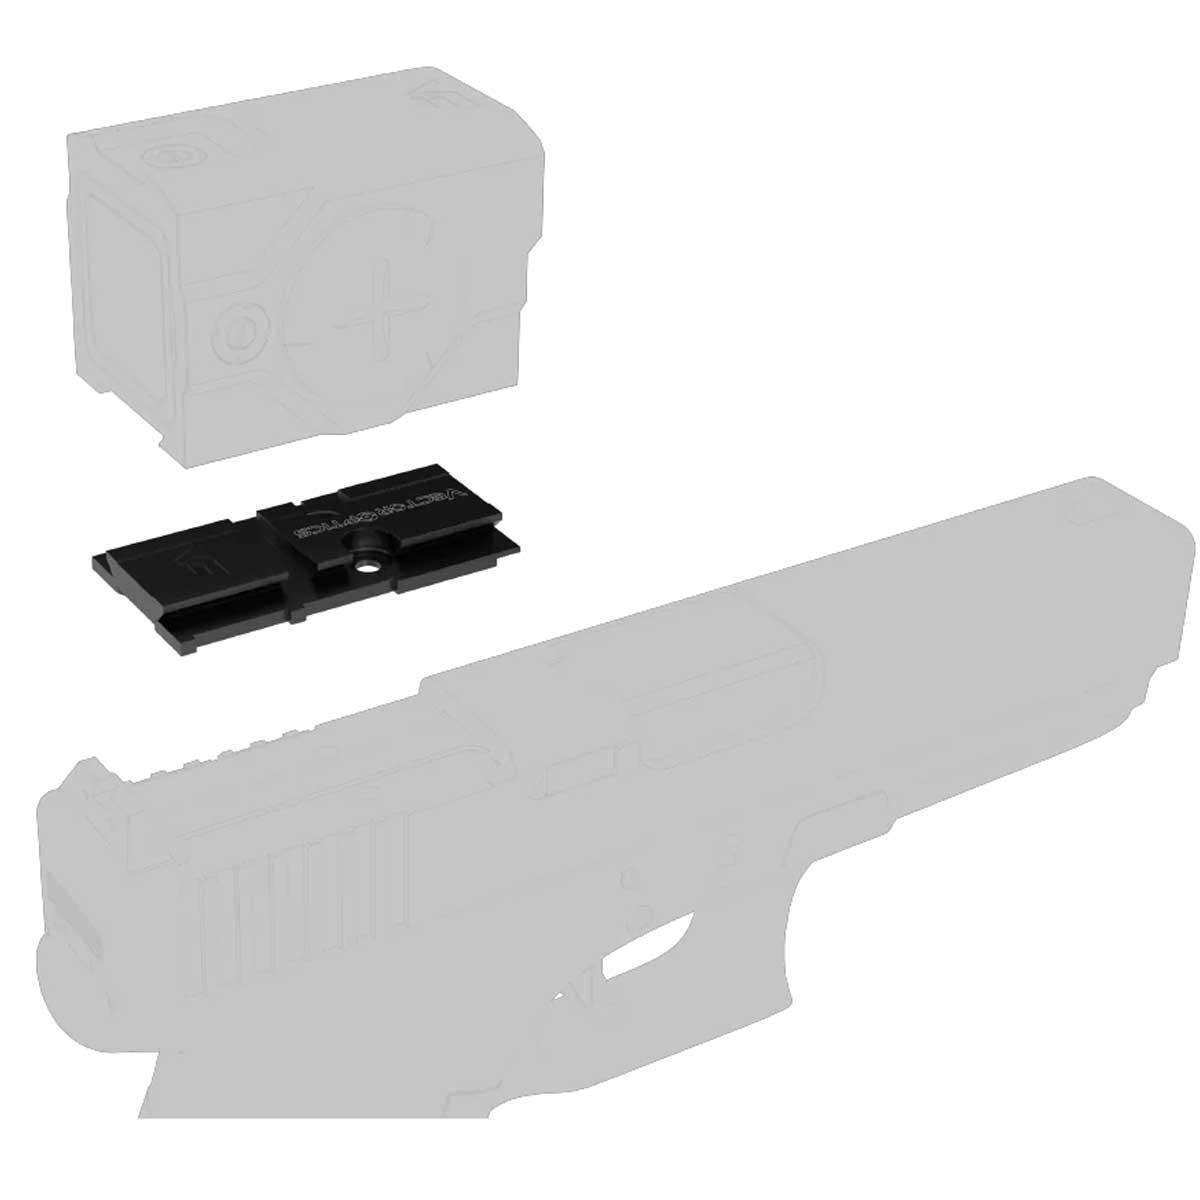 Vector Optics Montage compatible Glock MOS Empreinte VOD / Aimpt - RedDotSight